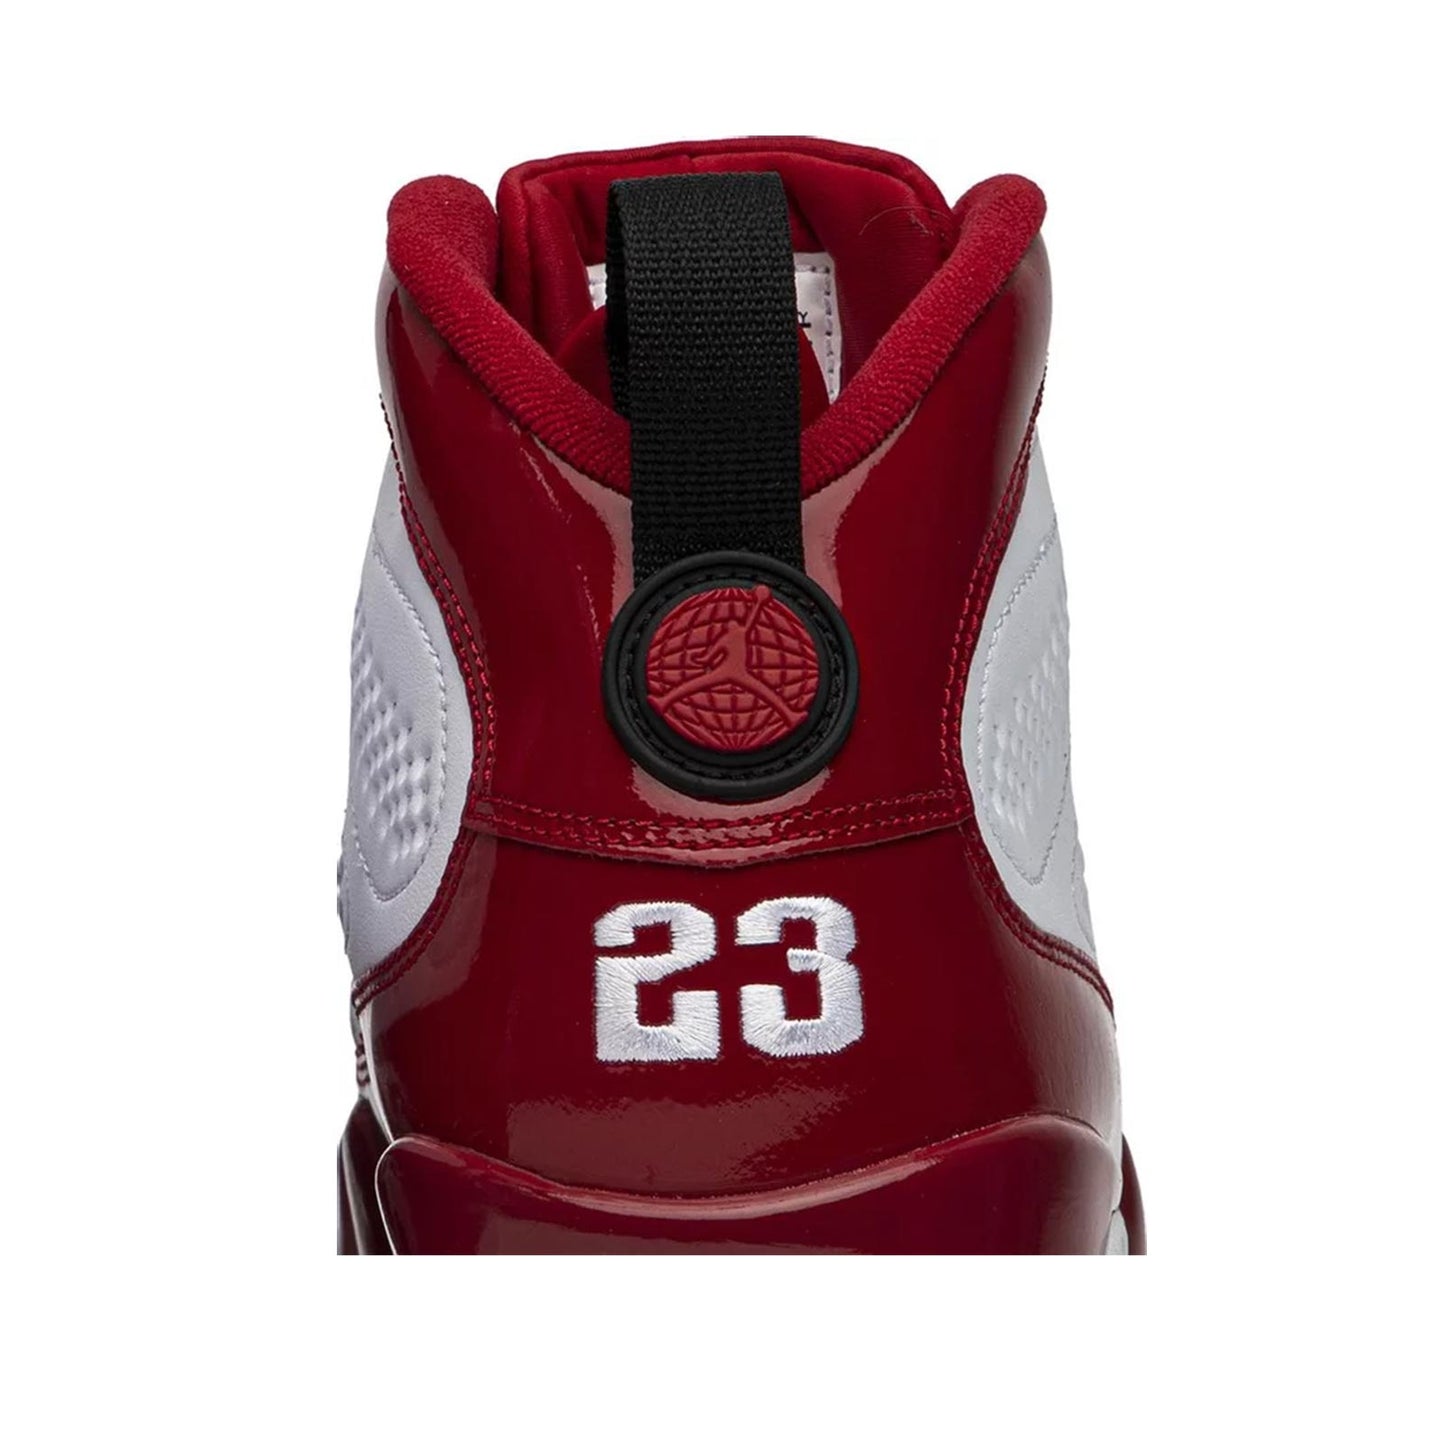 Air Jordan 9, Retro Gym Red